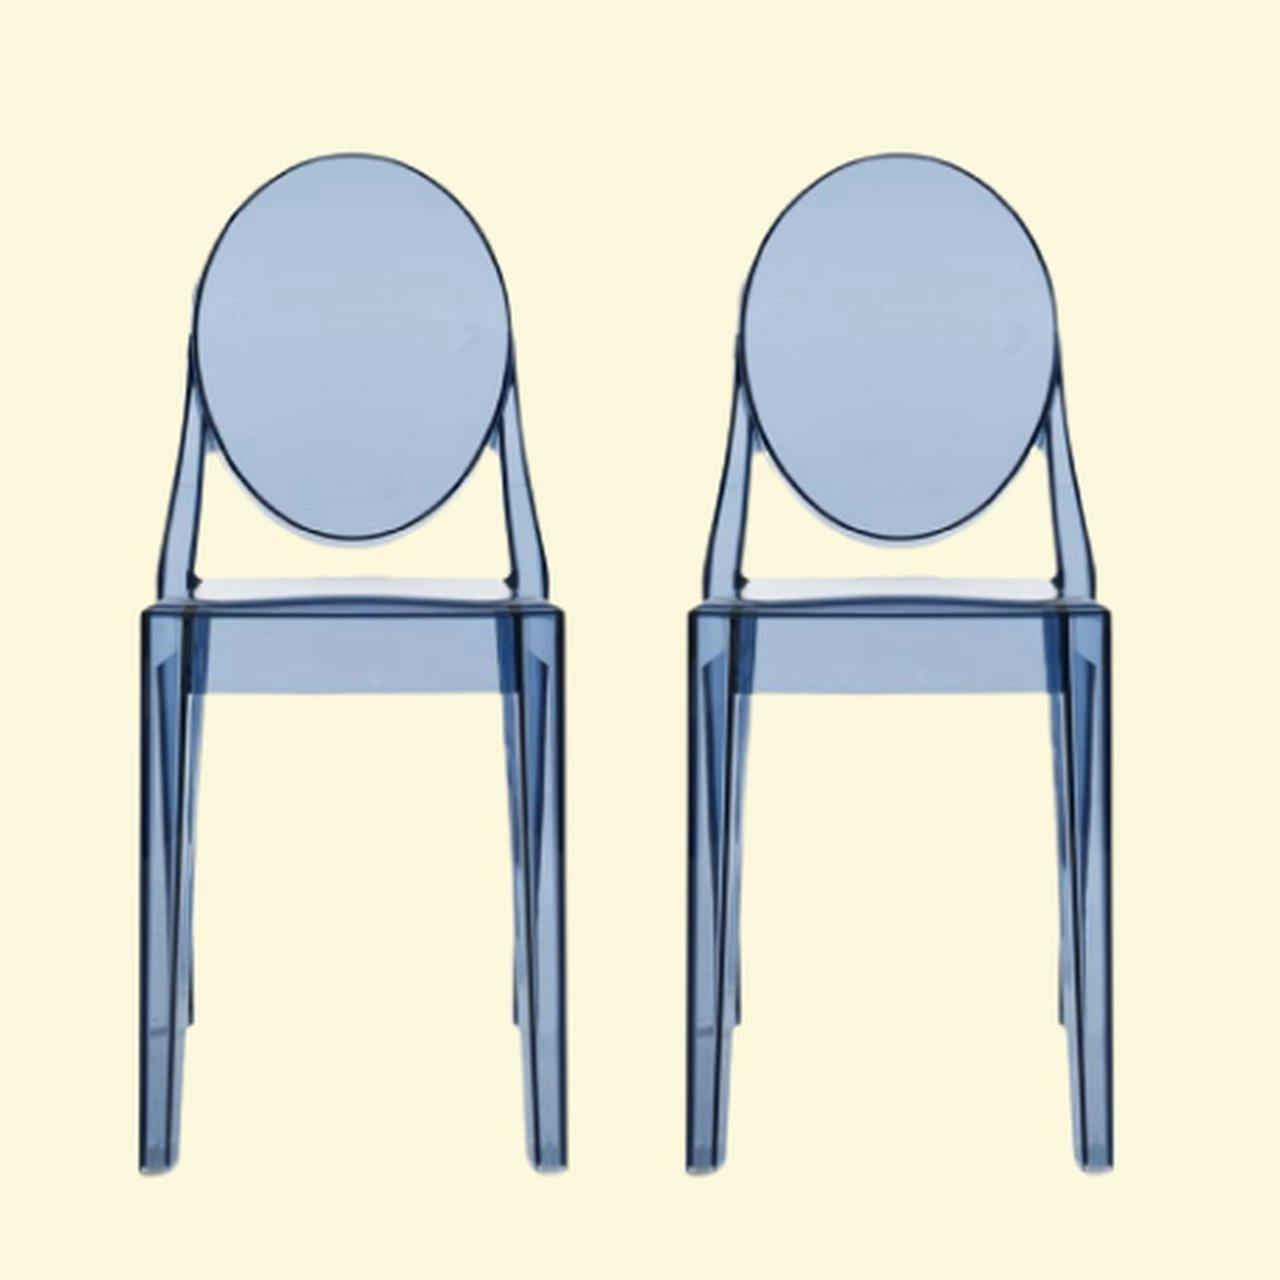 Arne Vodder Dining chairs